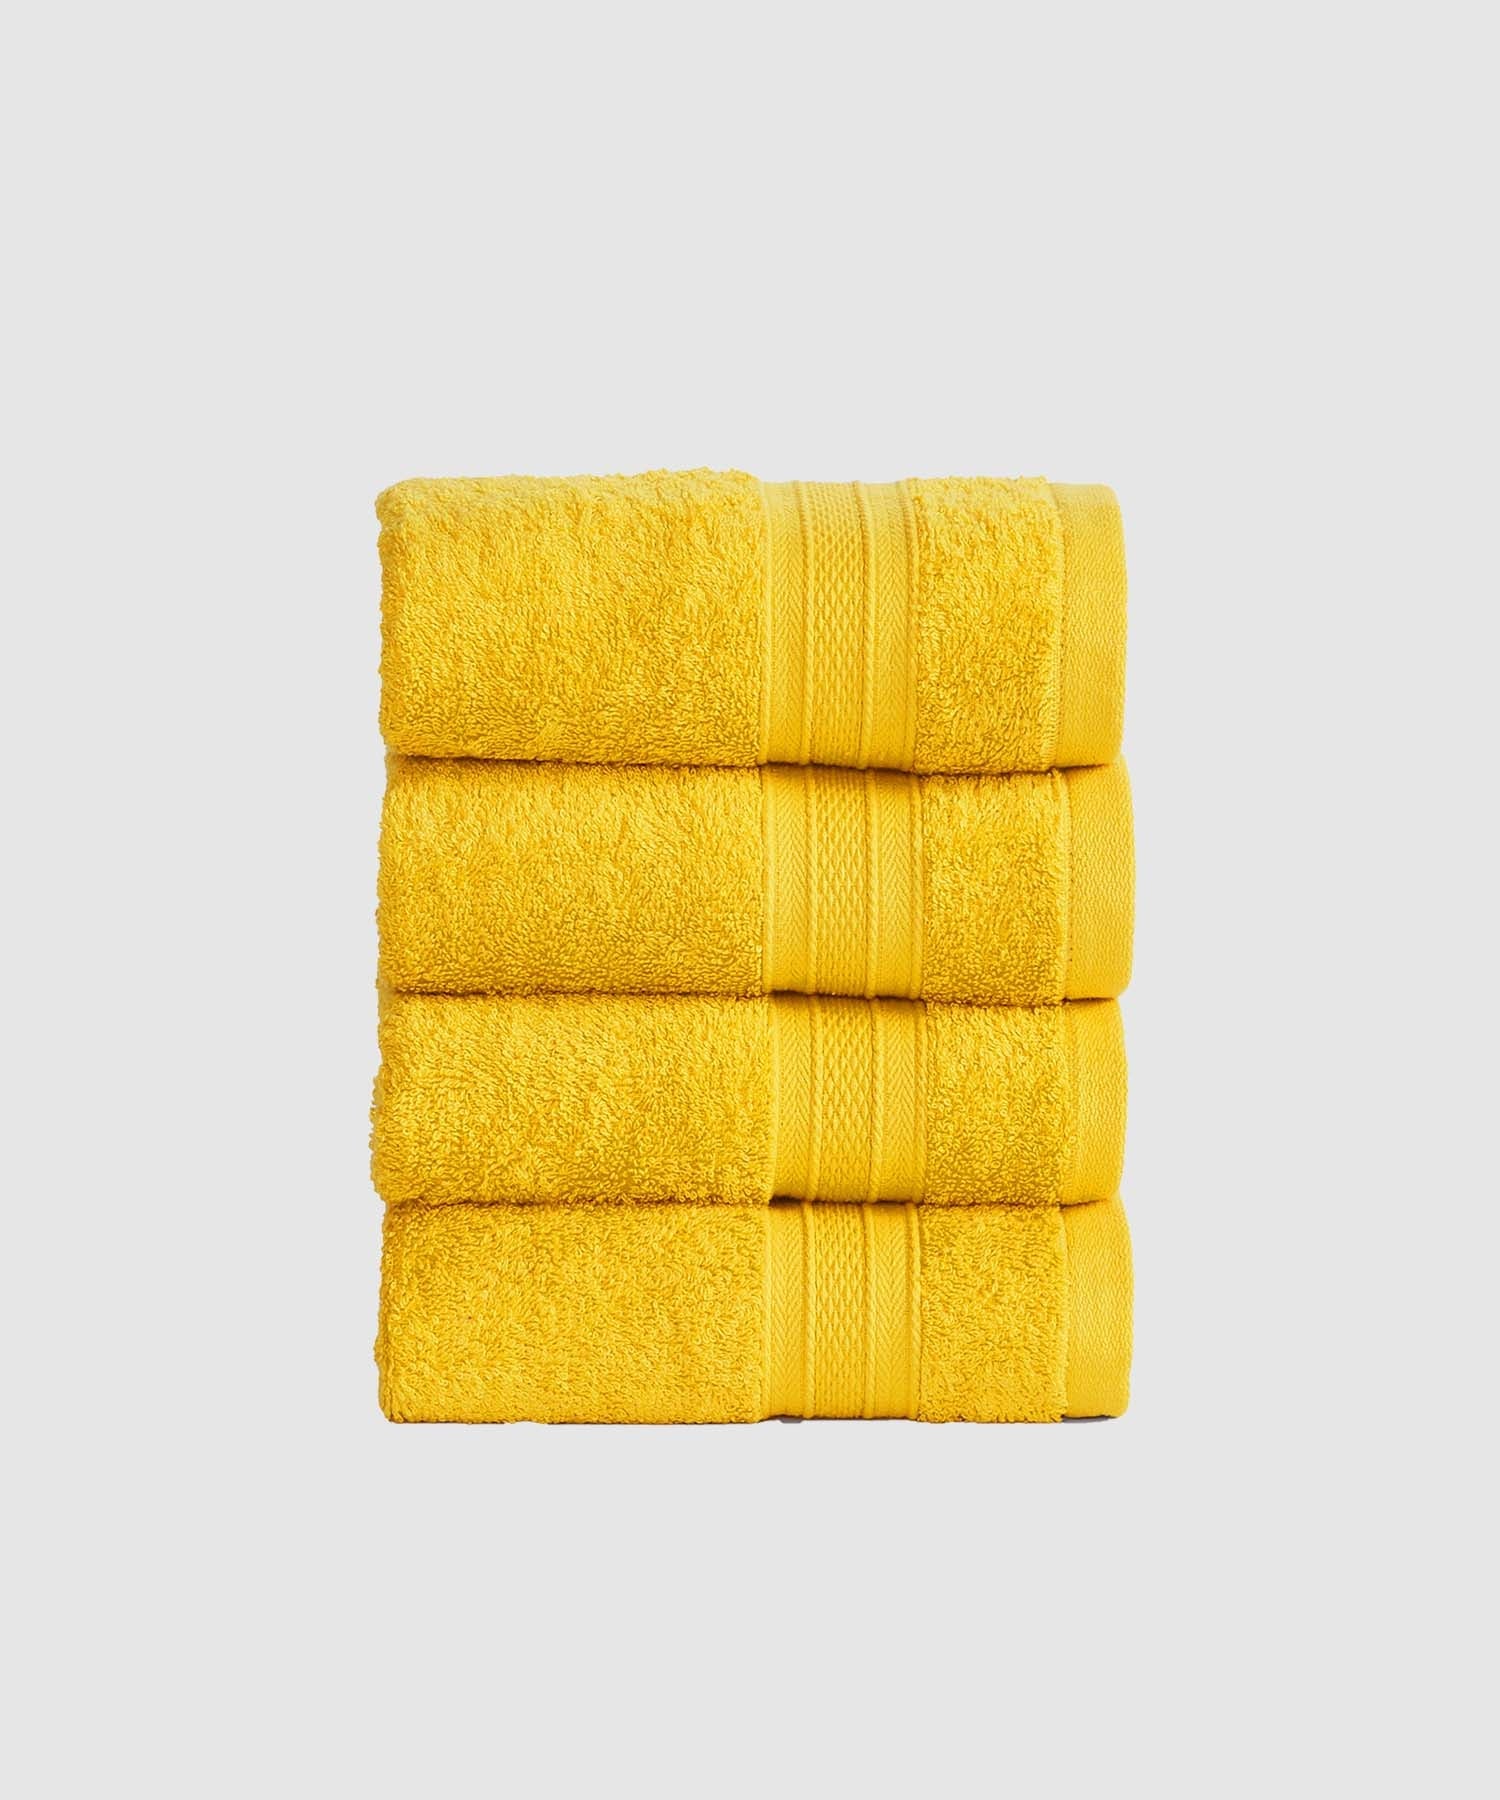 4 Pieces Hand Towel ₹499/-